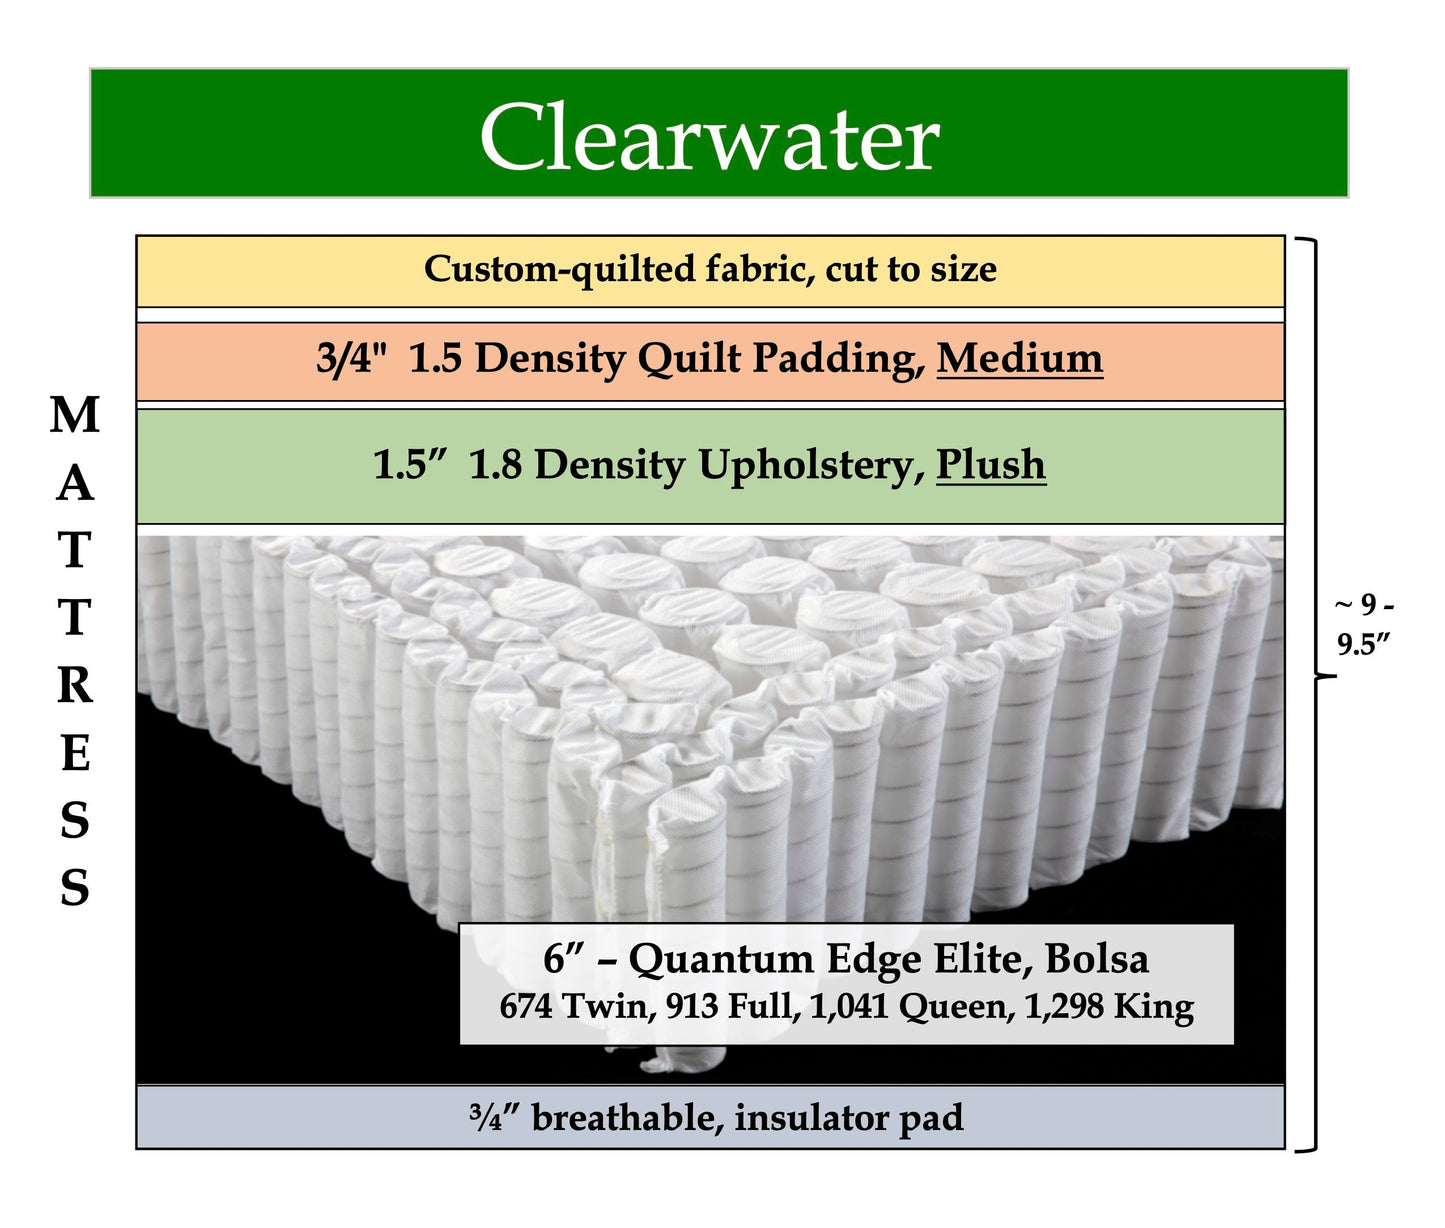 Clearwater, 52" x 71" mattress